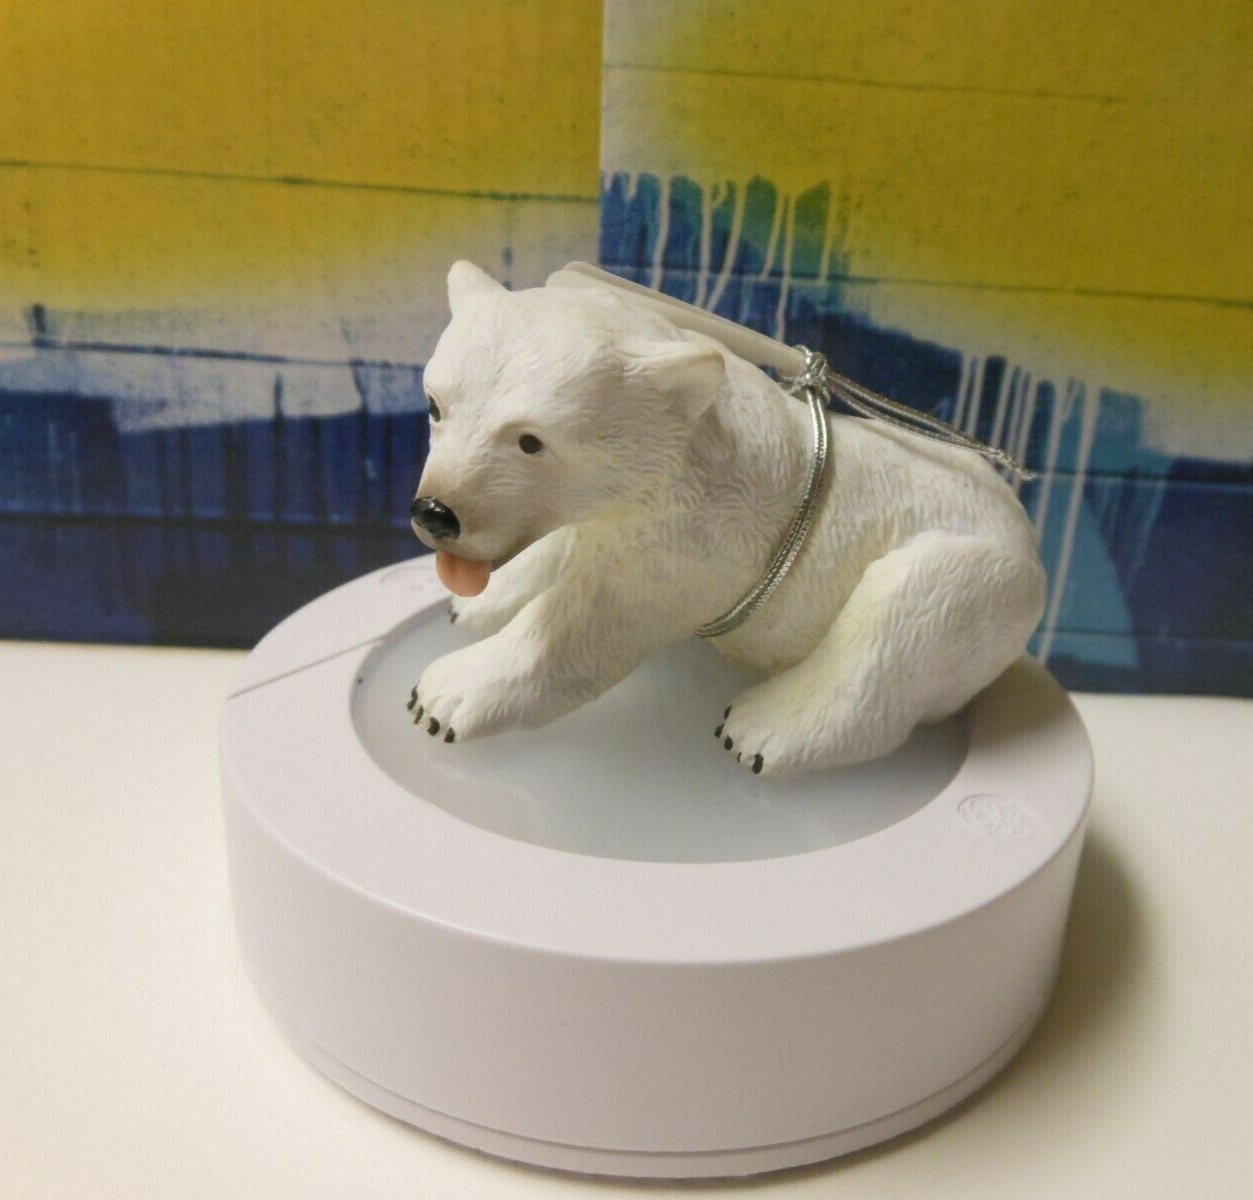  Breyer BEAR Collecta Wildlife #88216 Polar Bear CUB White Plastic  2017  Без бренда